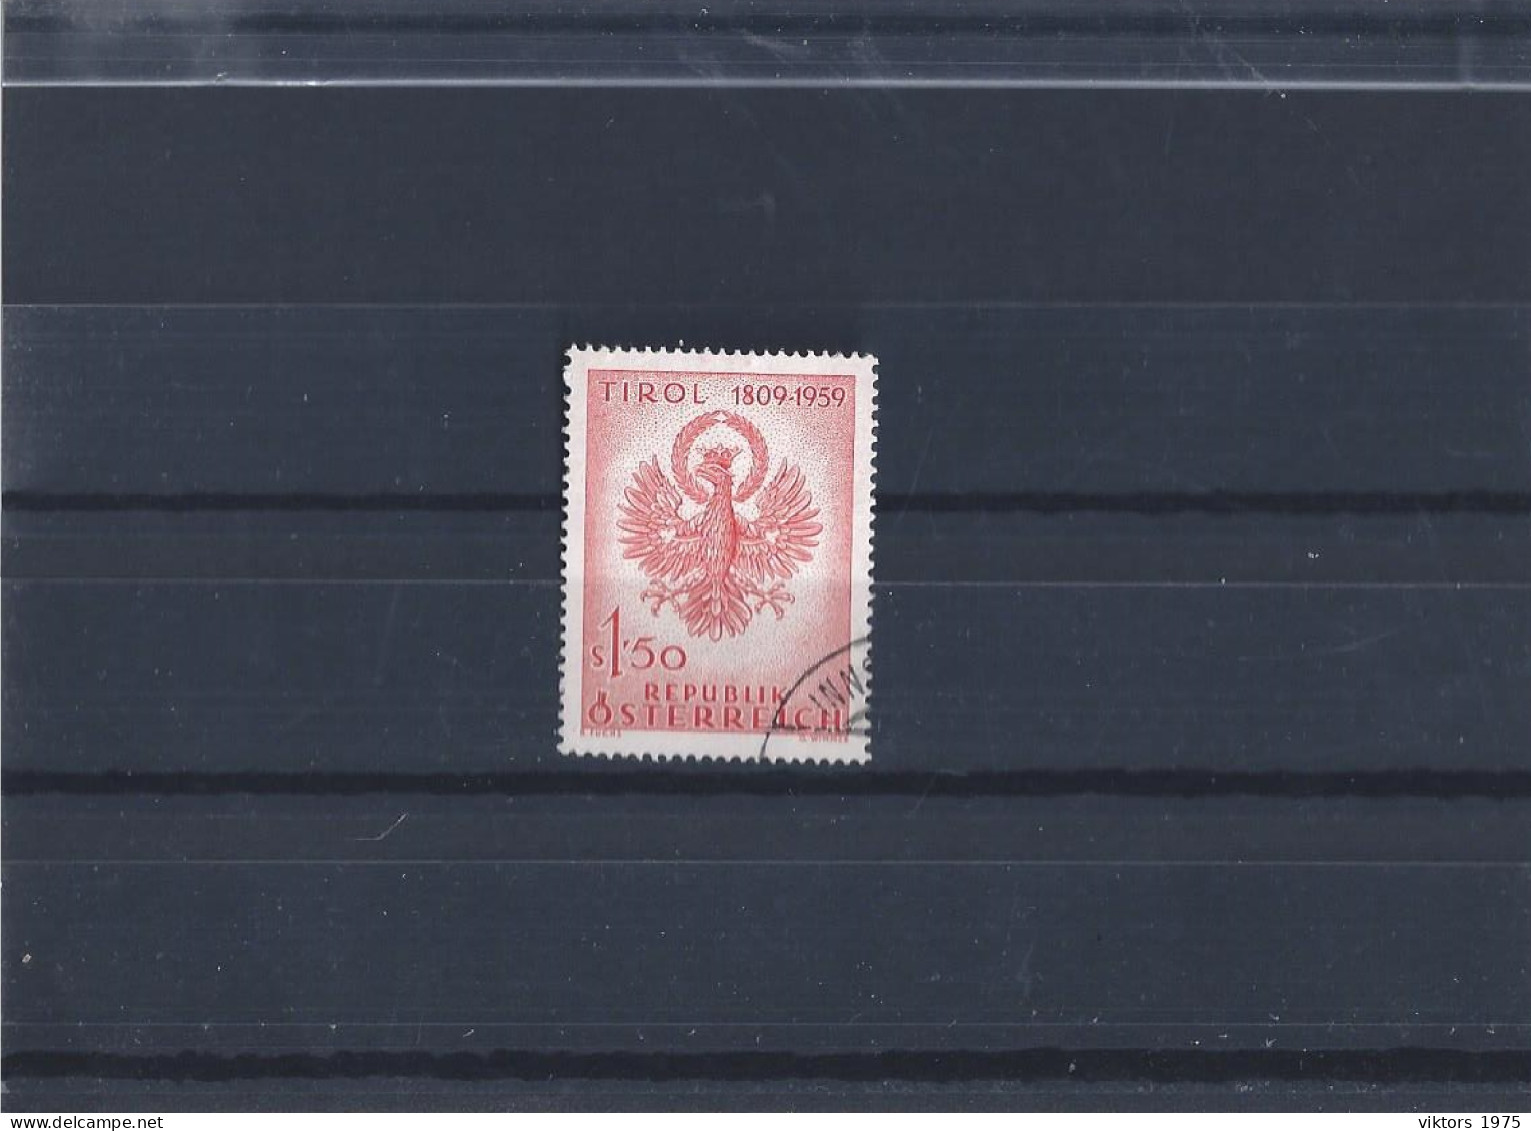 Used Stamp Nr.1067 In MICHEL Catalog - Gebraucht